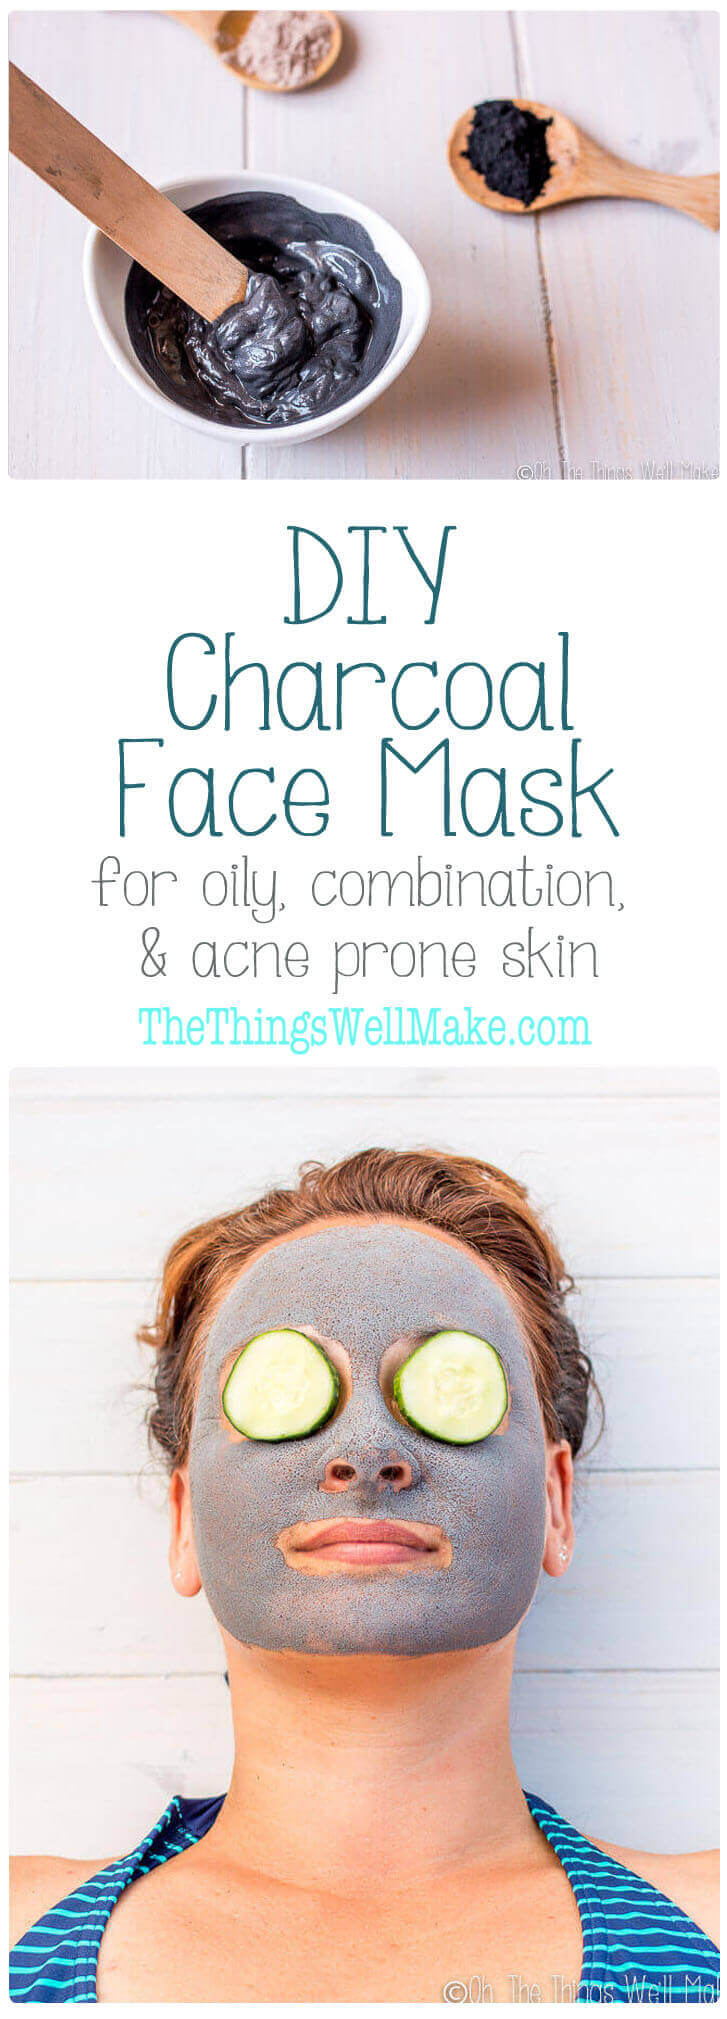 DIY Charcoal Face Mask for Acne Prone Skin - DIY Charcoal Face Mask for Acne Prone Skin -   17 diy Face Mask lush ideas